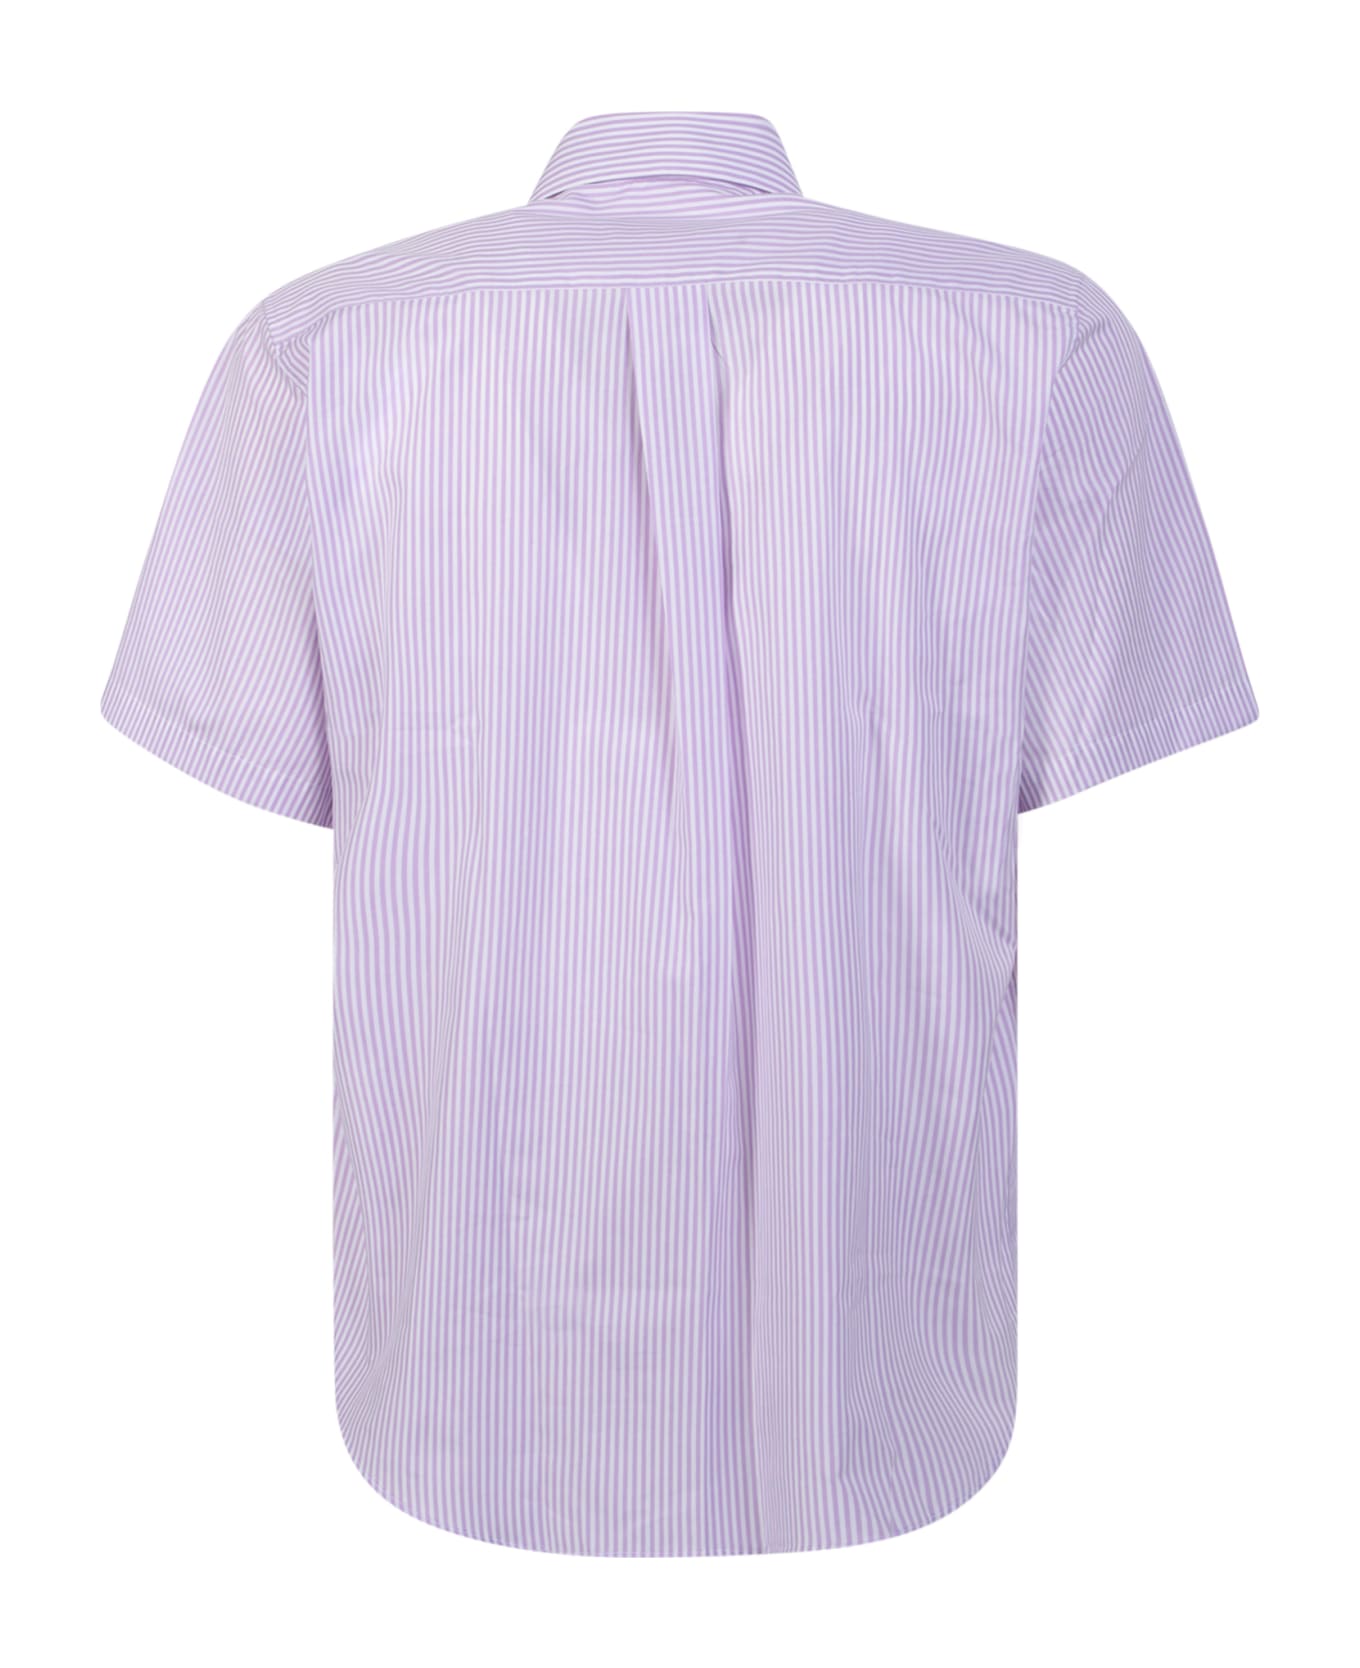 Martine Rose Lilac/white Striped Shirt - Purple